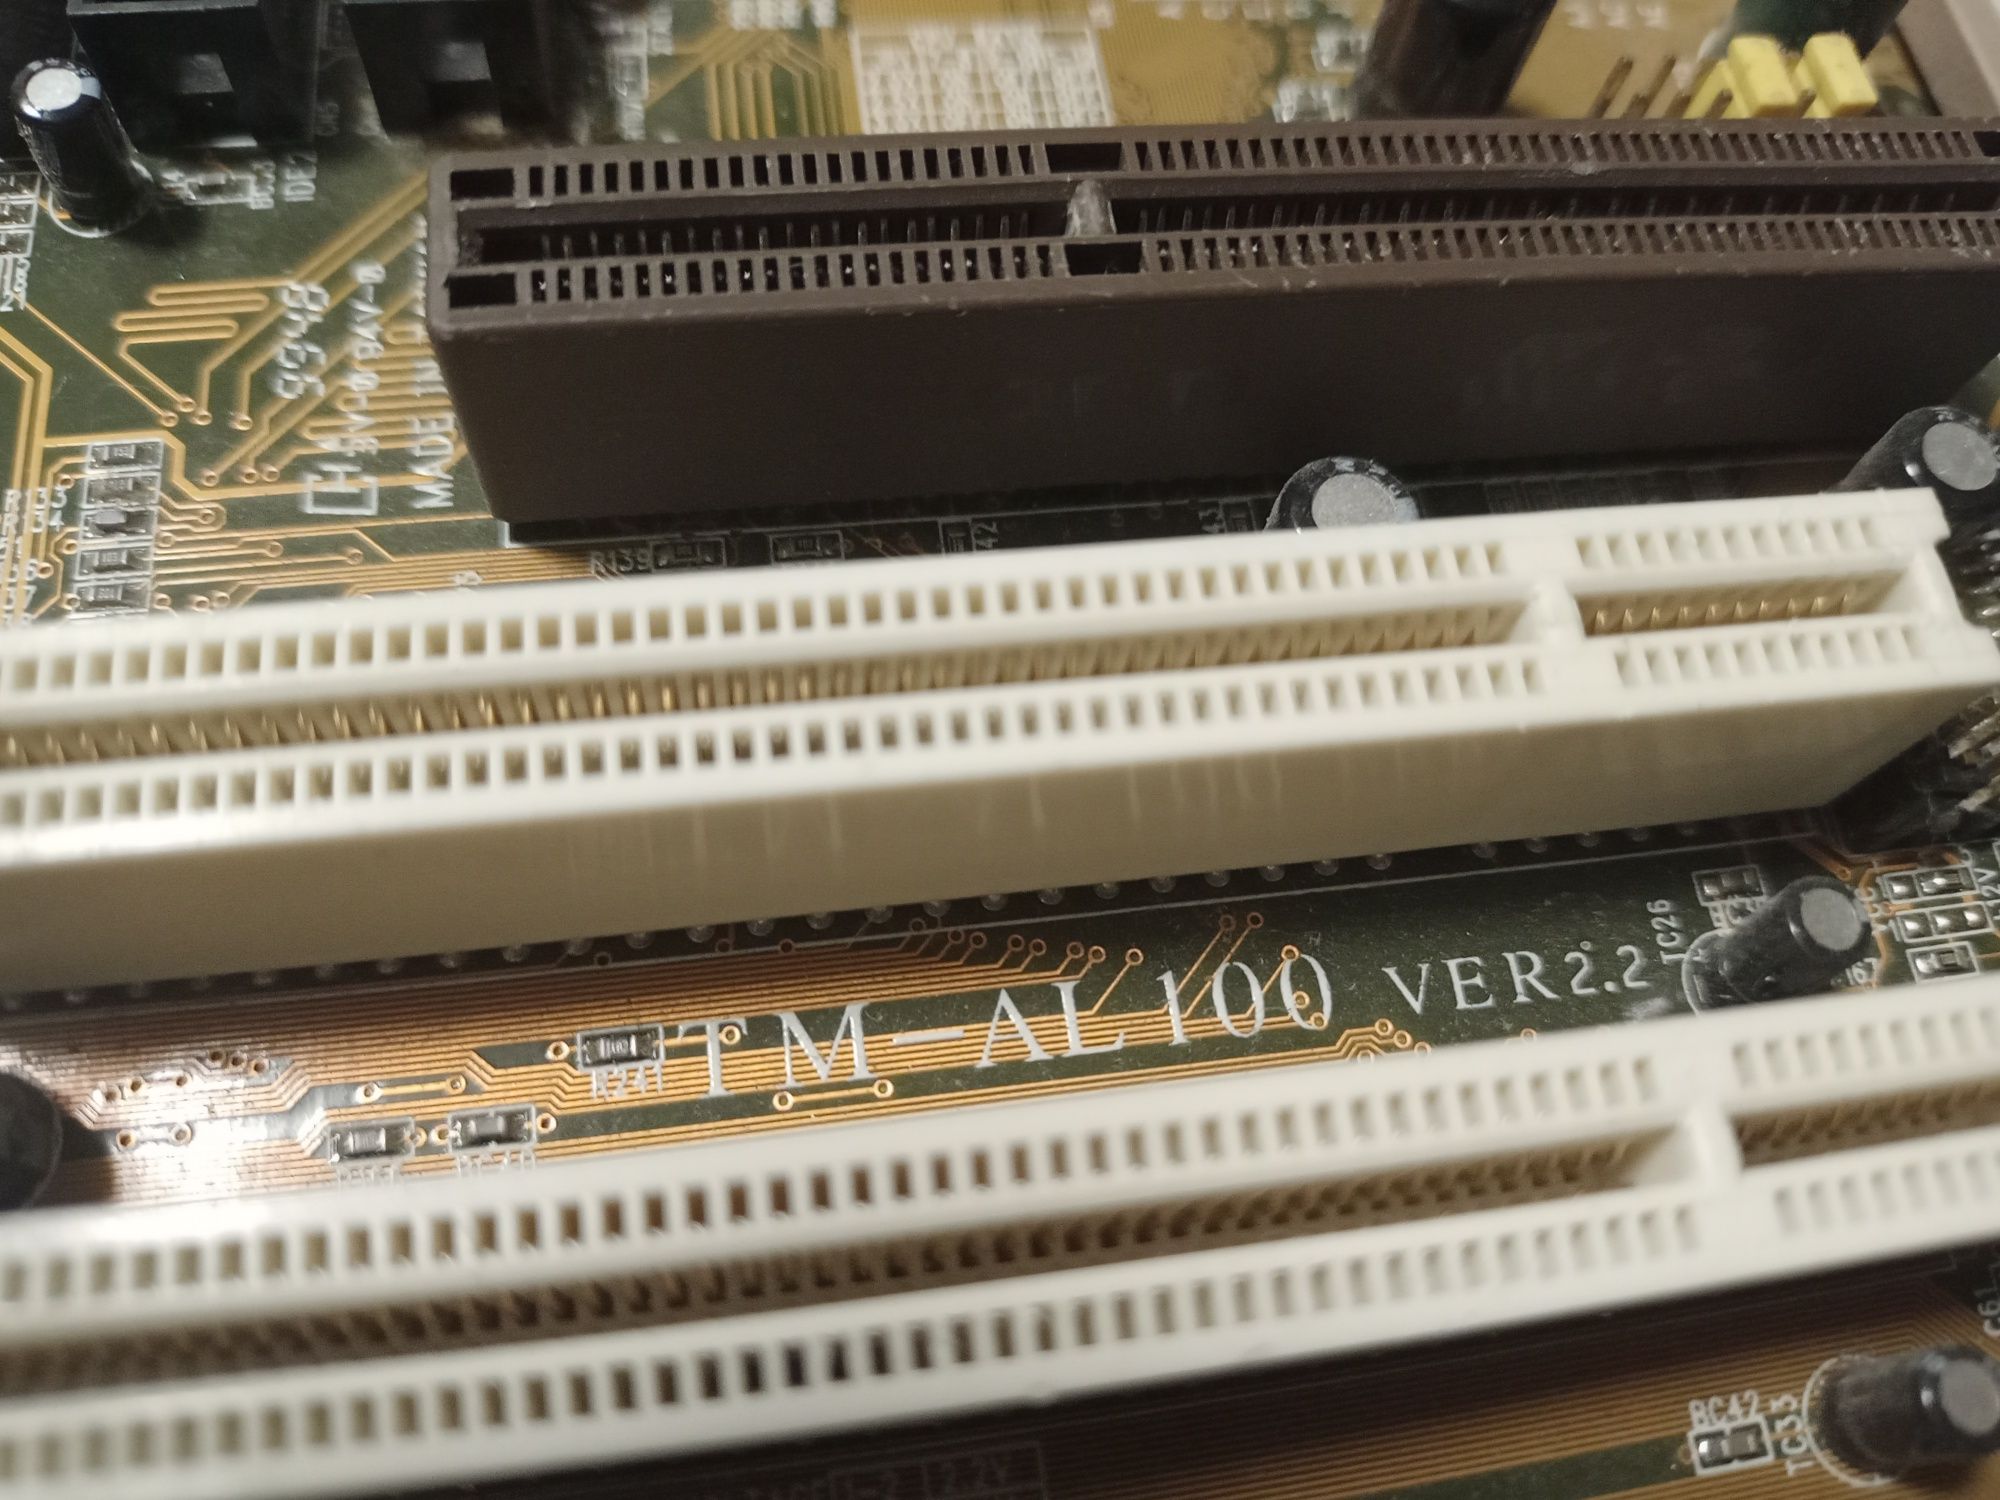 Kolekcja retro płyta Ali tm-al100 socket 7 AMD k6 400mhz